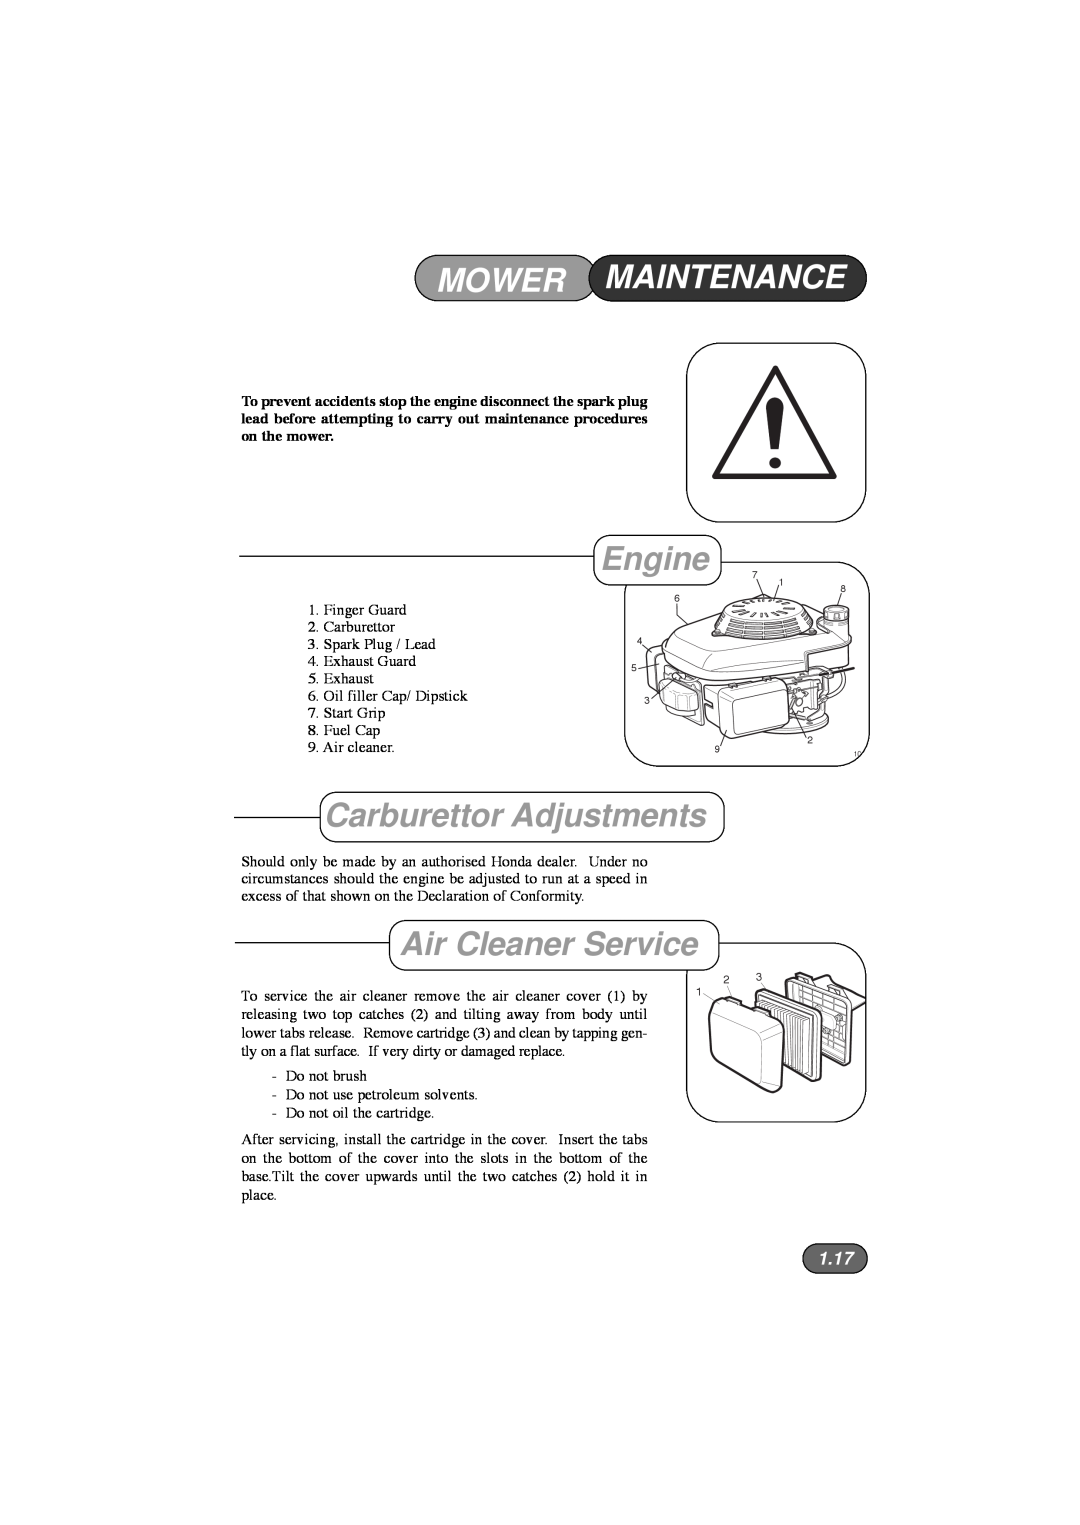 Hayter Mowers 453, 450, 446 Hovertrim manual Mower Maintenance, Engine, Carburettor Adjustments, Air Cleaner Service, 1.17 